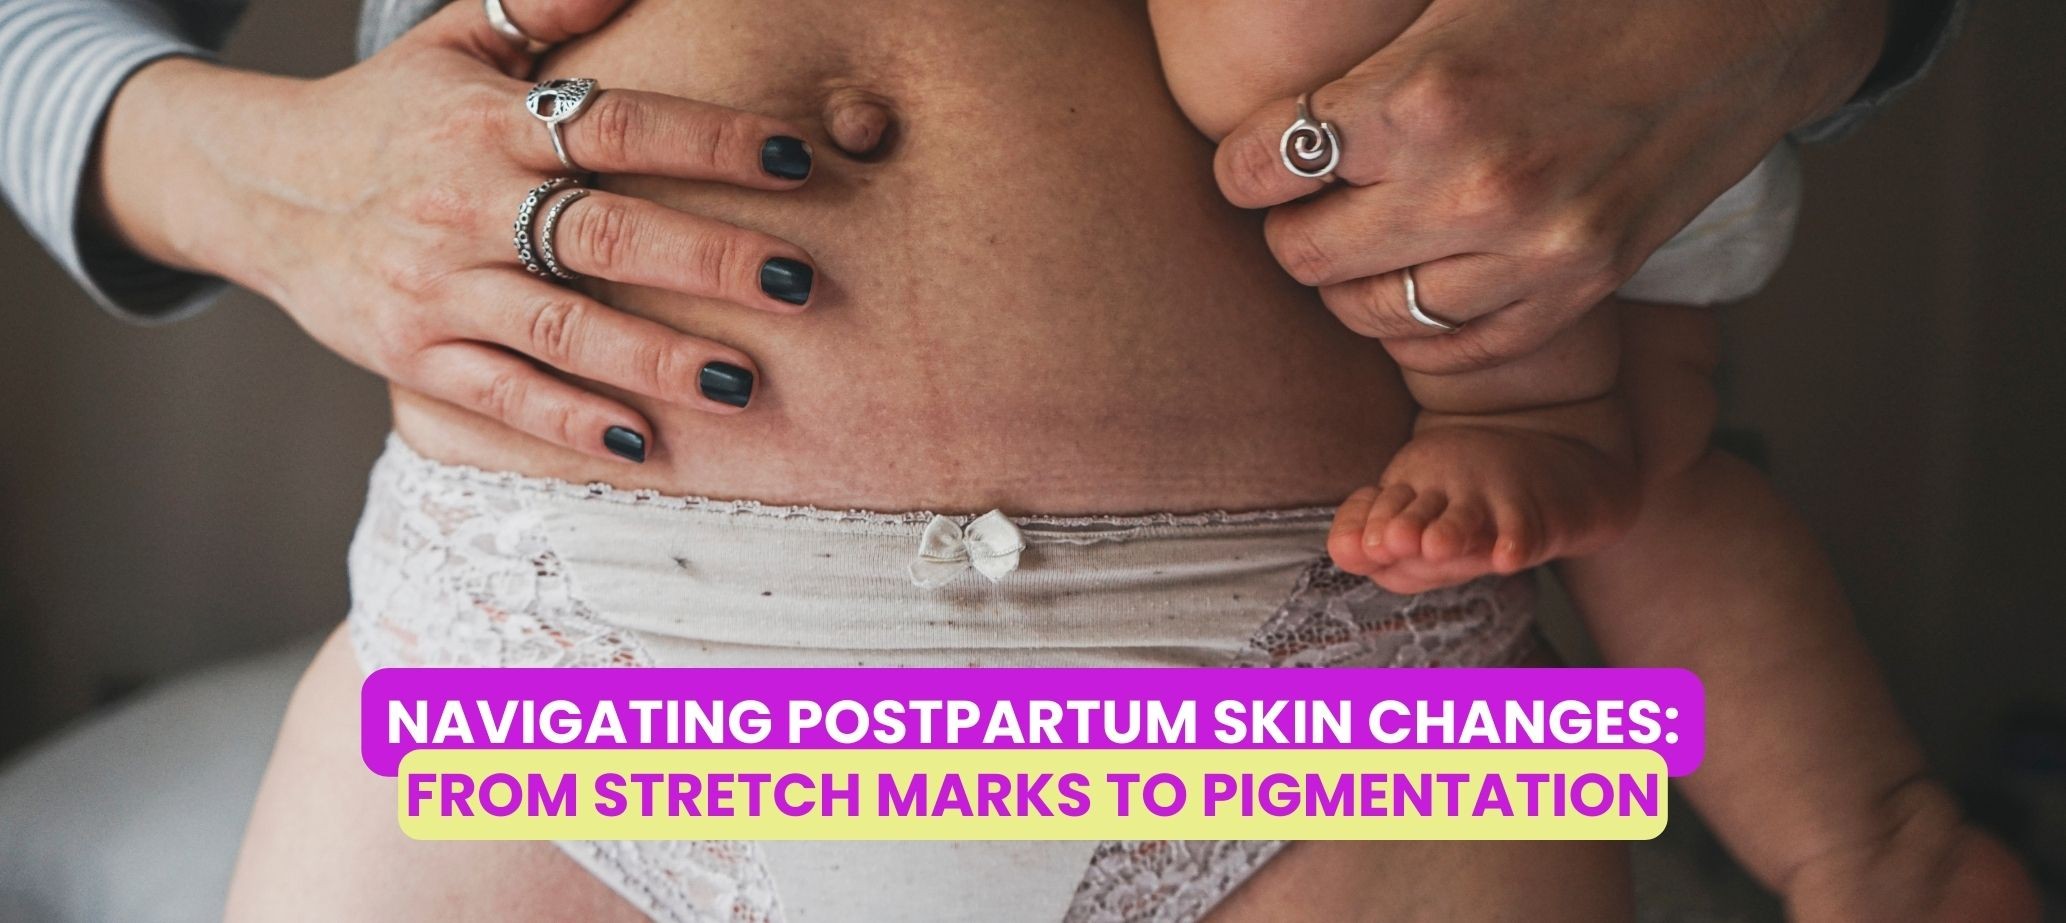 Navigating Postpartum Skin Changes: From Stretch Marks to Pigmentation